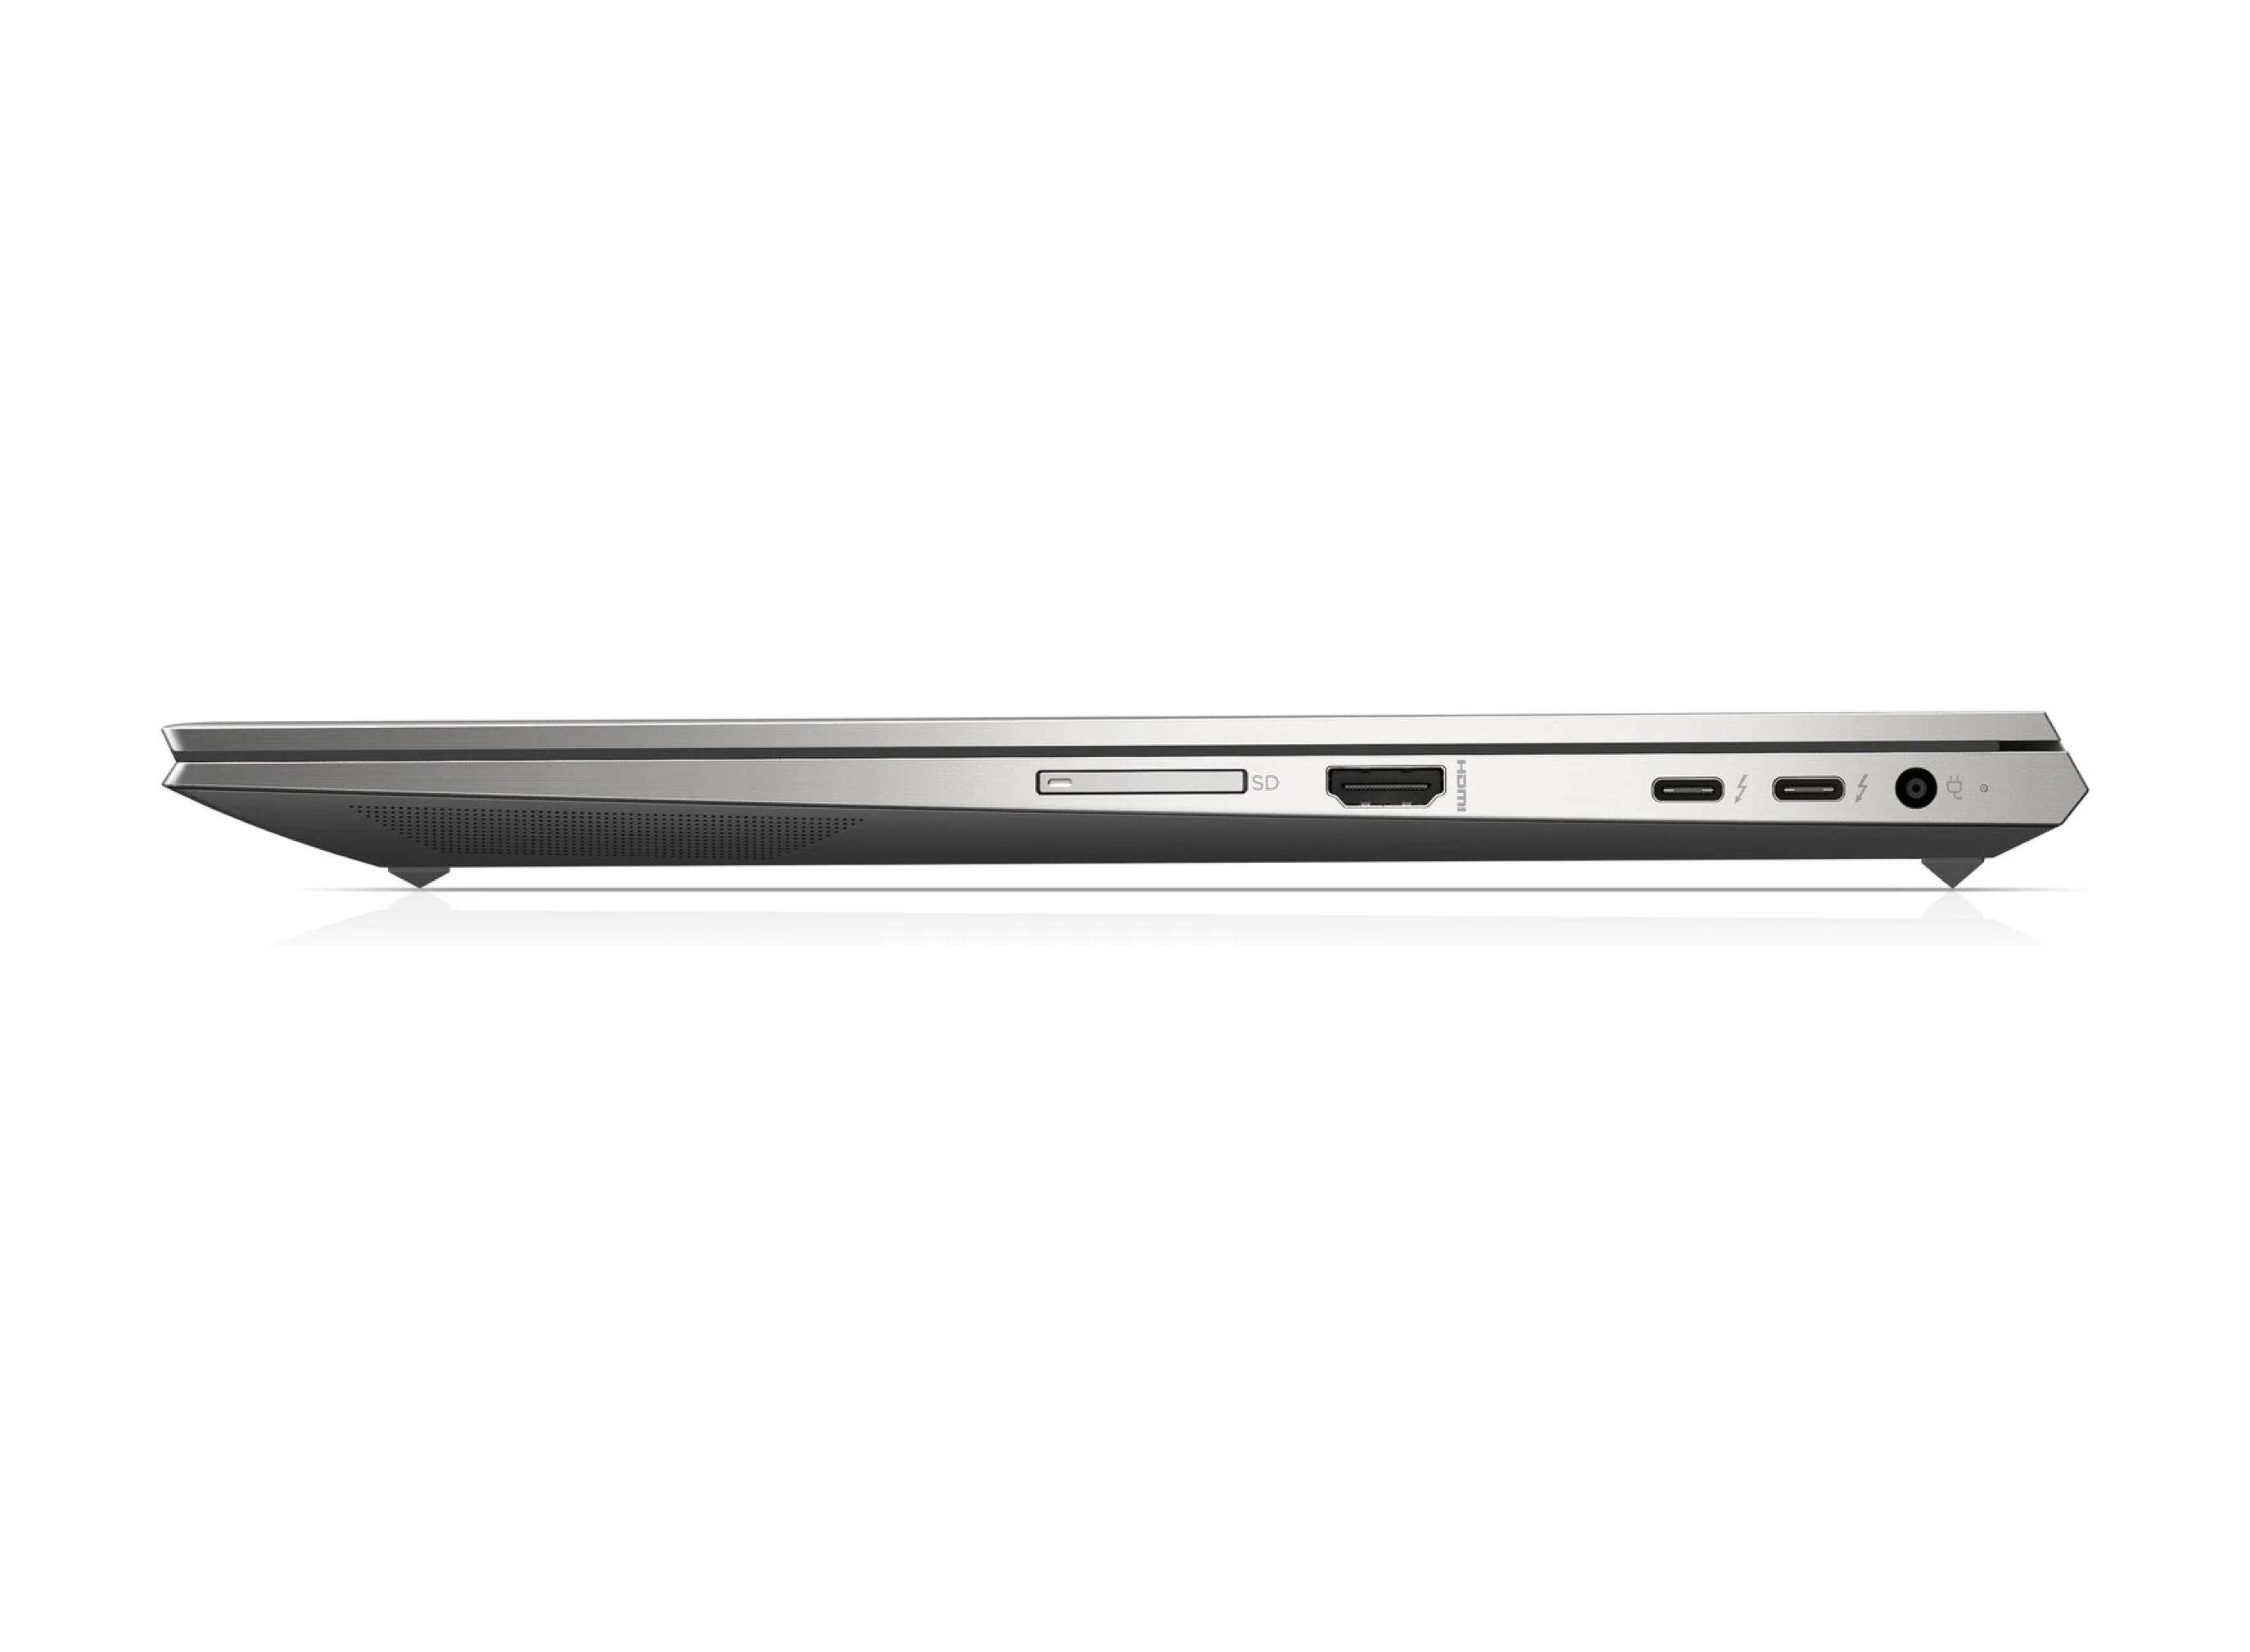  مشخصات لپ تاپ HP ZBook G7 Studio | لاکچری لپ تاپ 